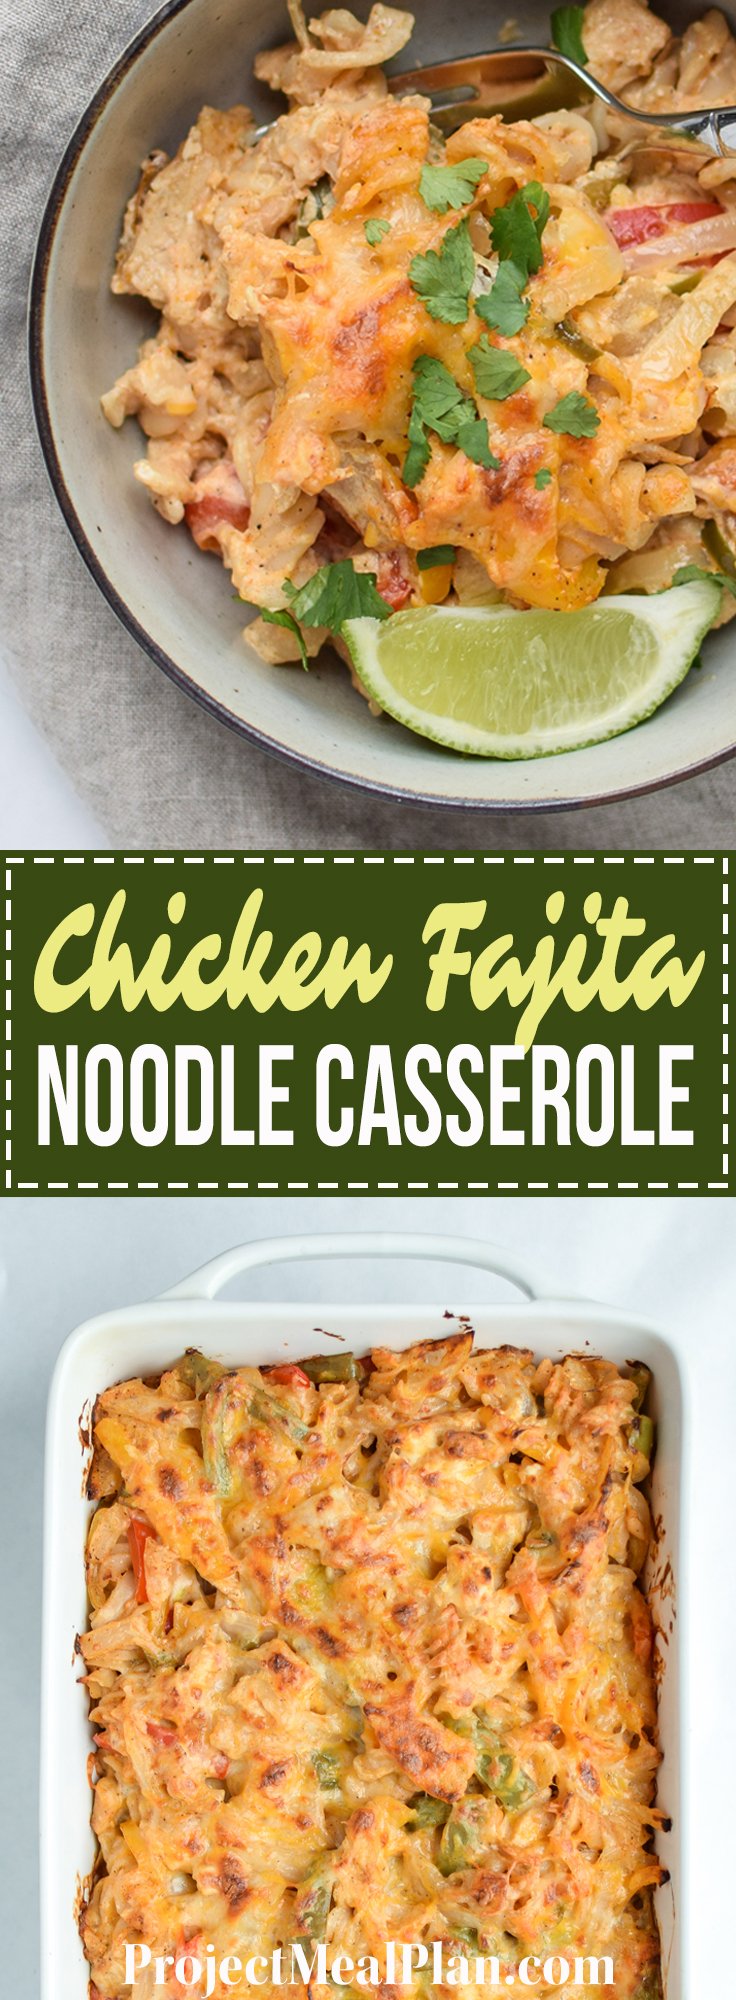 Baked Chicken Fajita Noodle Casserole - All the best chicken fajita flavors with peppers and onions, in casserole form! - ProjectMealPlan.com